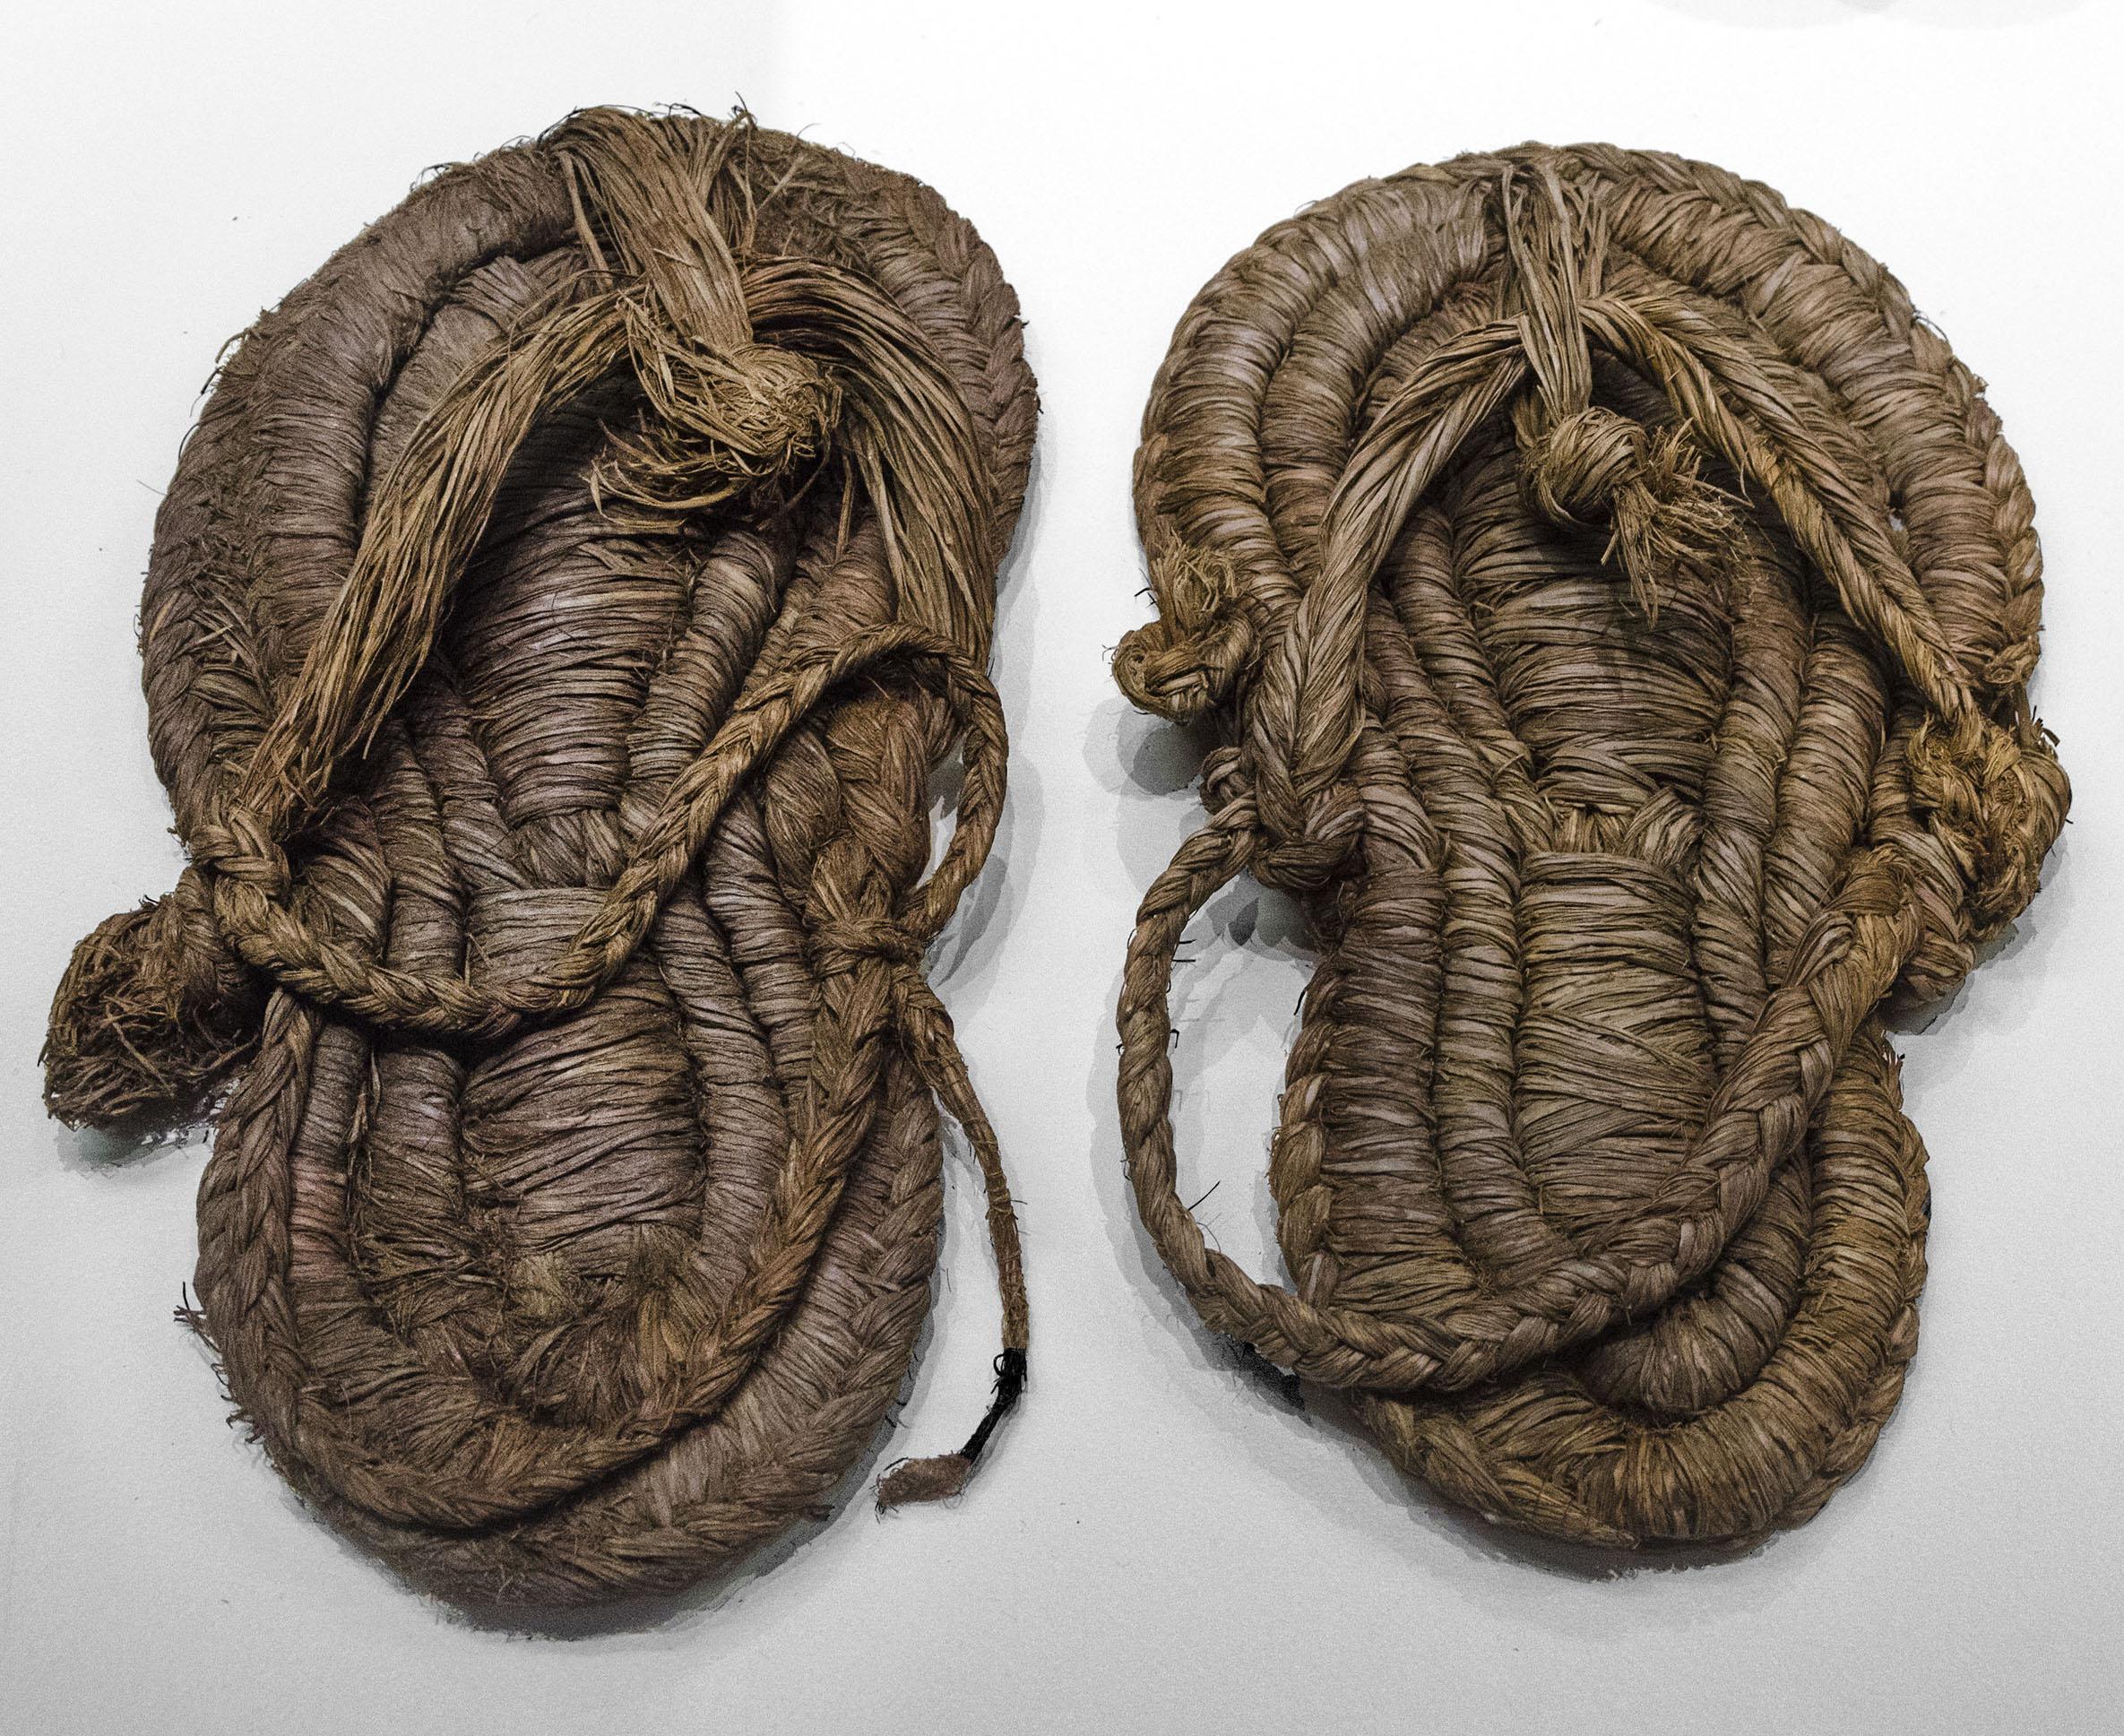 7,000-year-old sandals made of esparto grass. Cueva de los Murciélagos, Spain, 5200-4800 BC.jpg